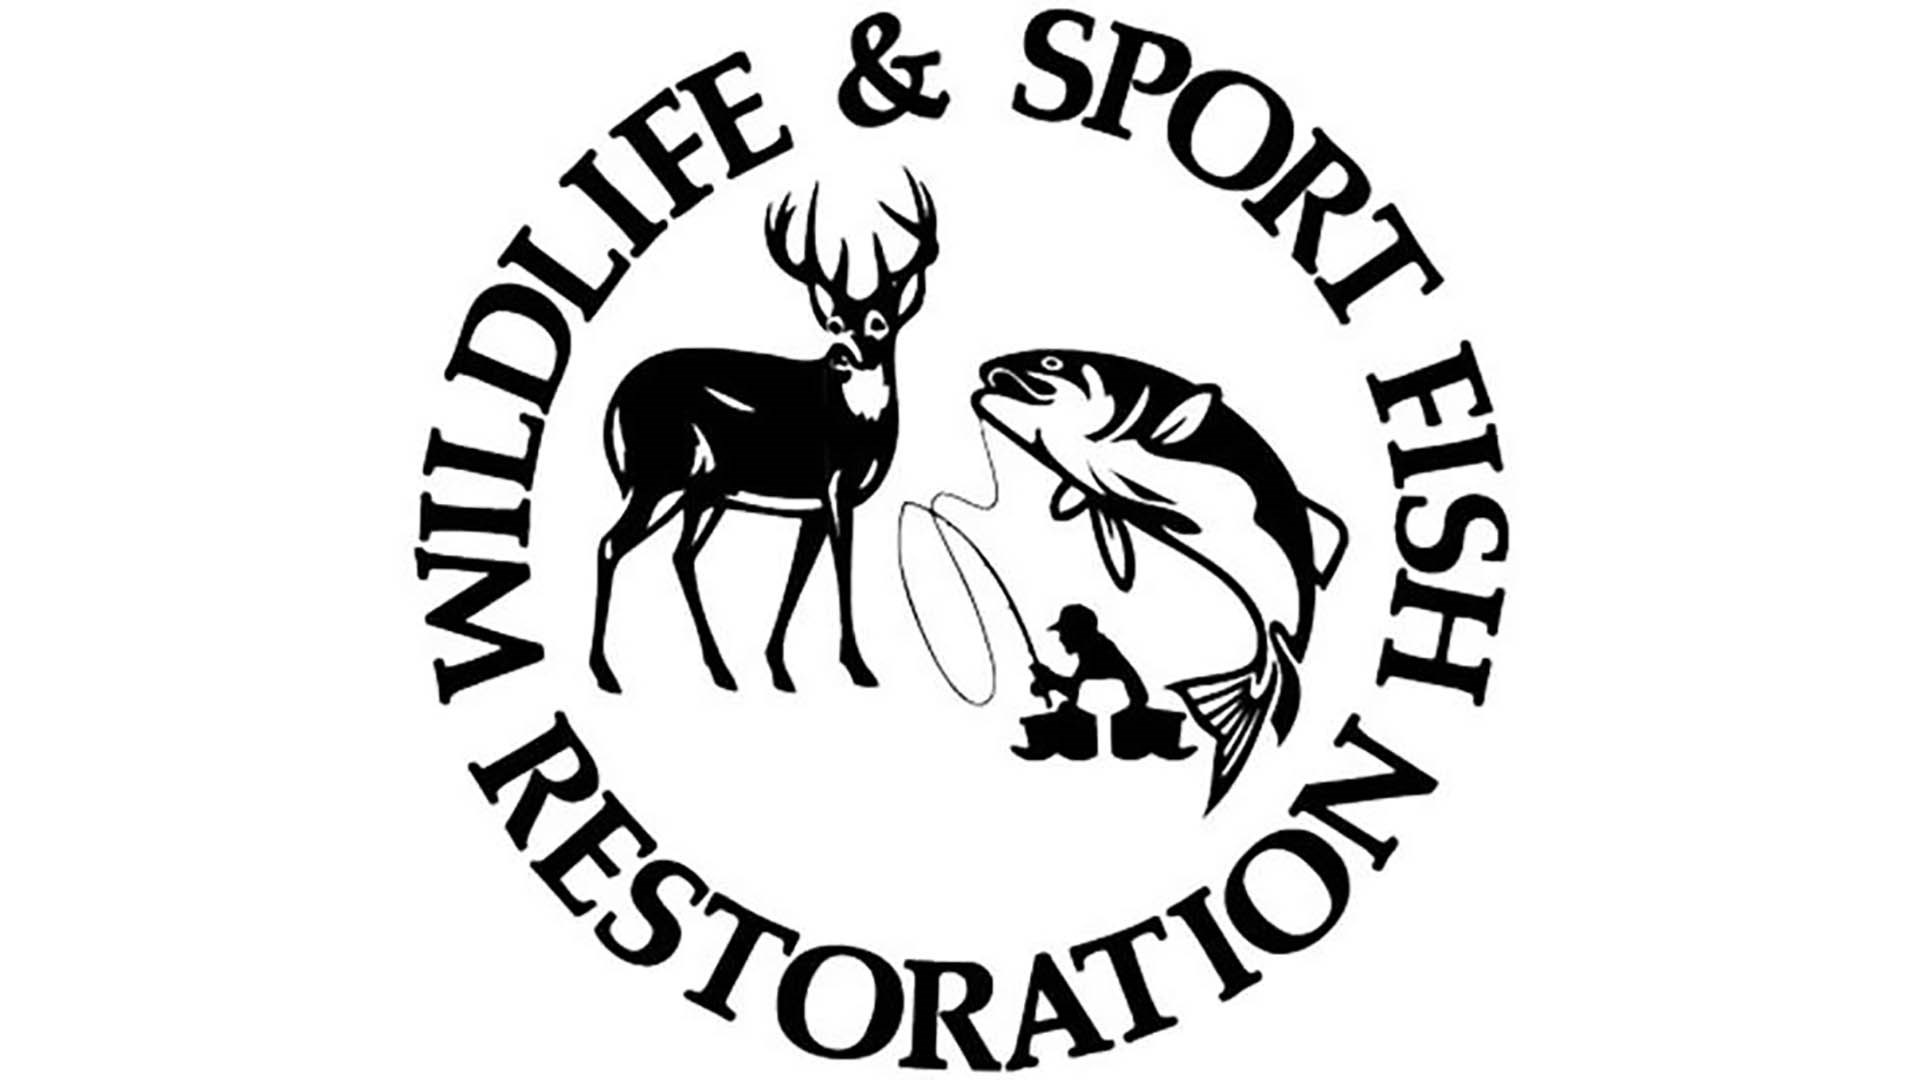 Wildlife & Sport Fish Restoration logo deer fish fisherman black leters text on image white background